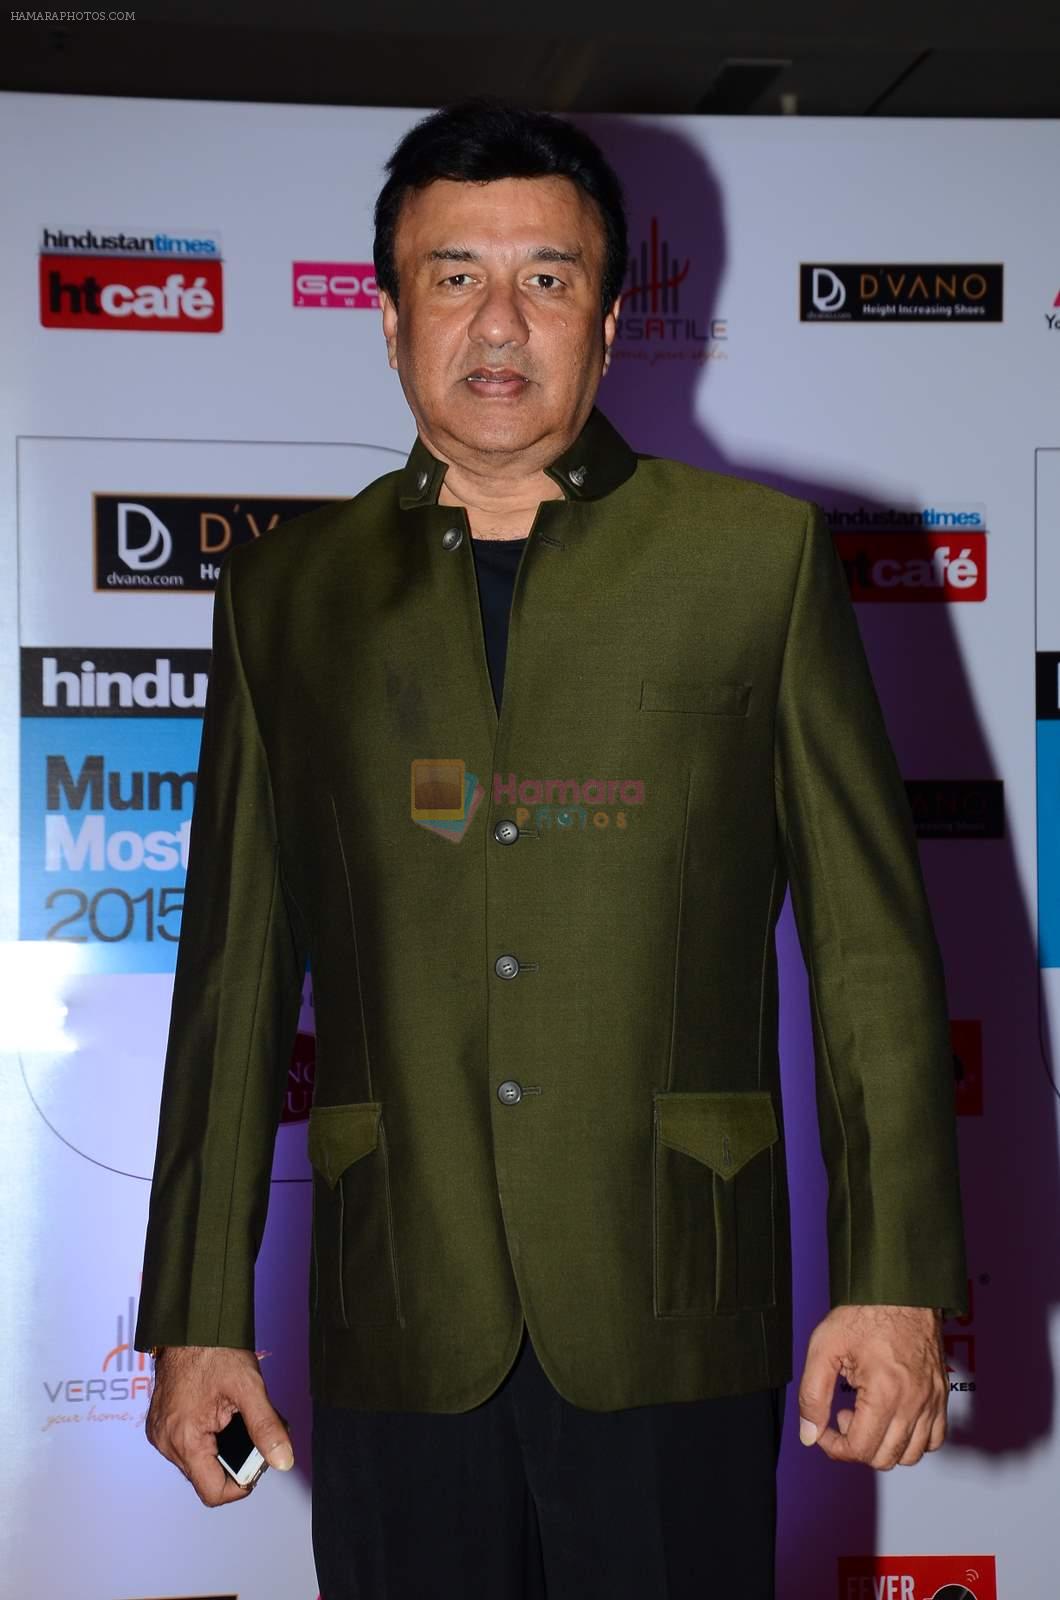 Anu Malik at HT Mumbai's Most Stylish Awards 2015 in Mumbai on 26th March 2015